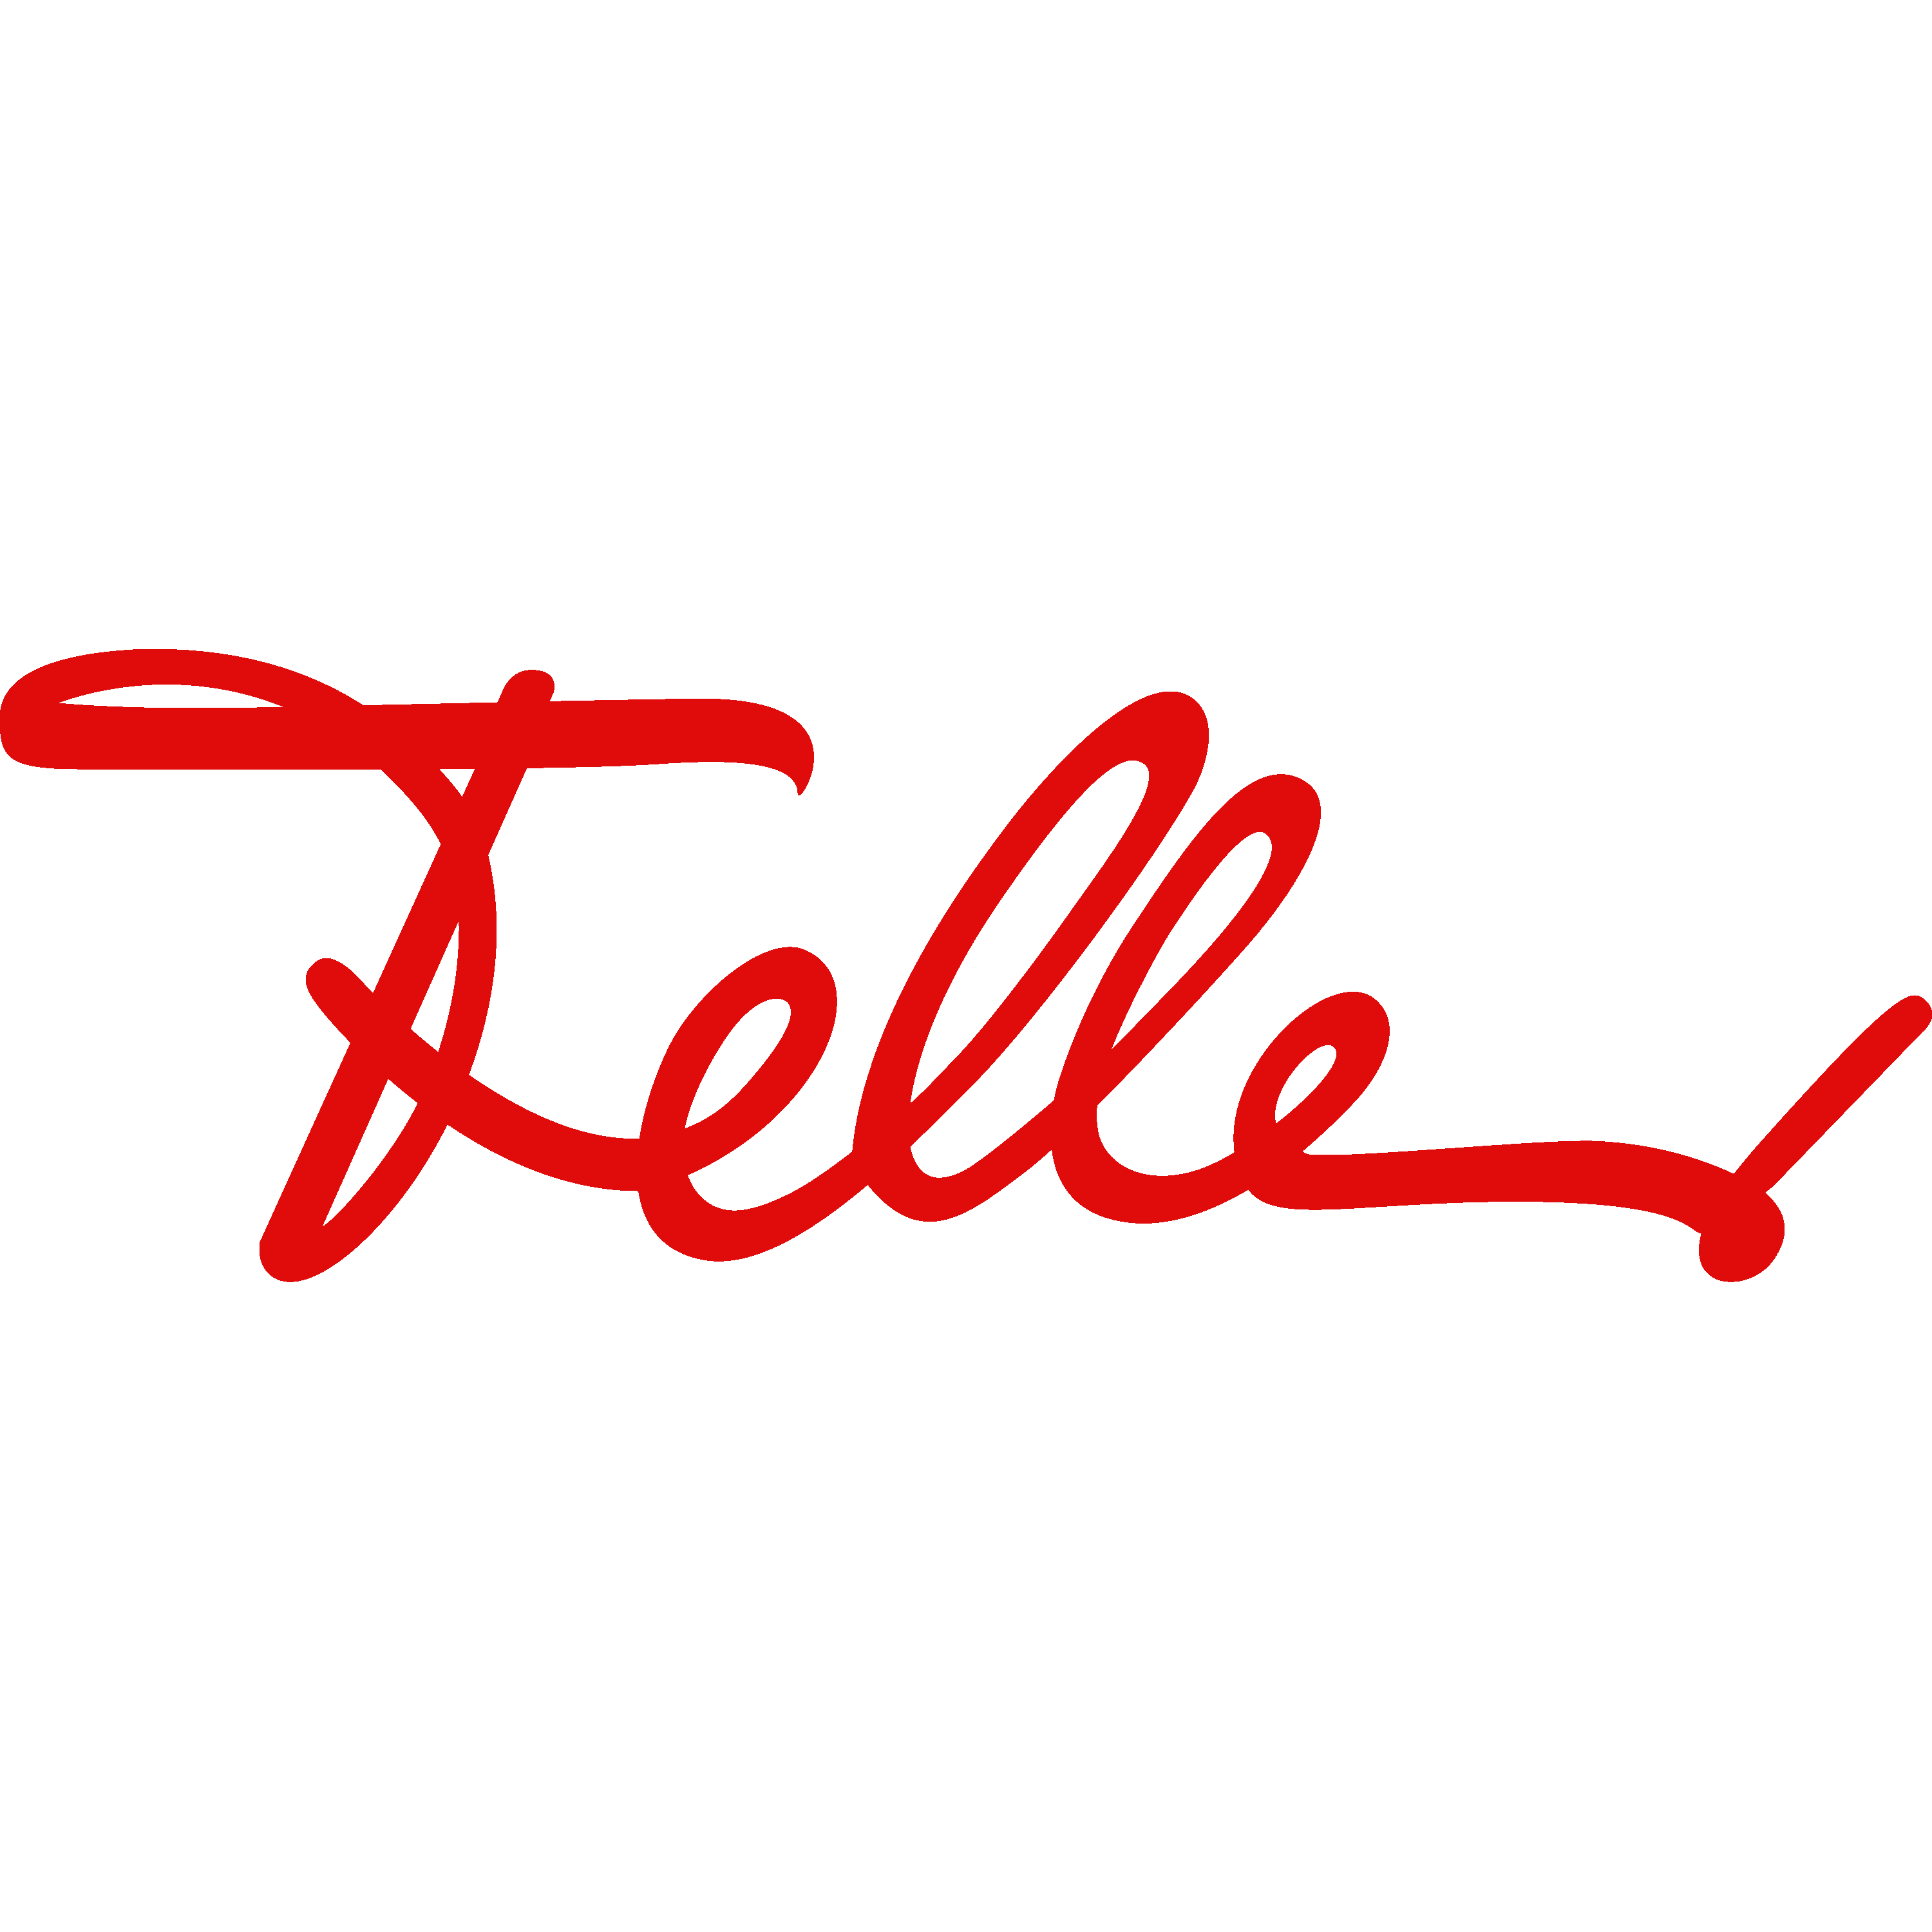 Feller Logo  Transparent Photo